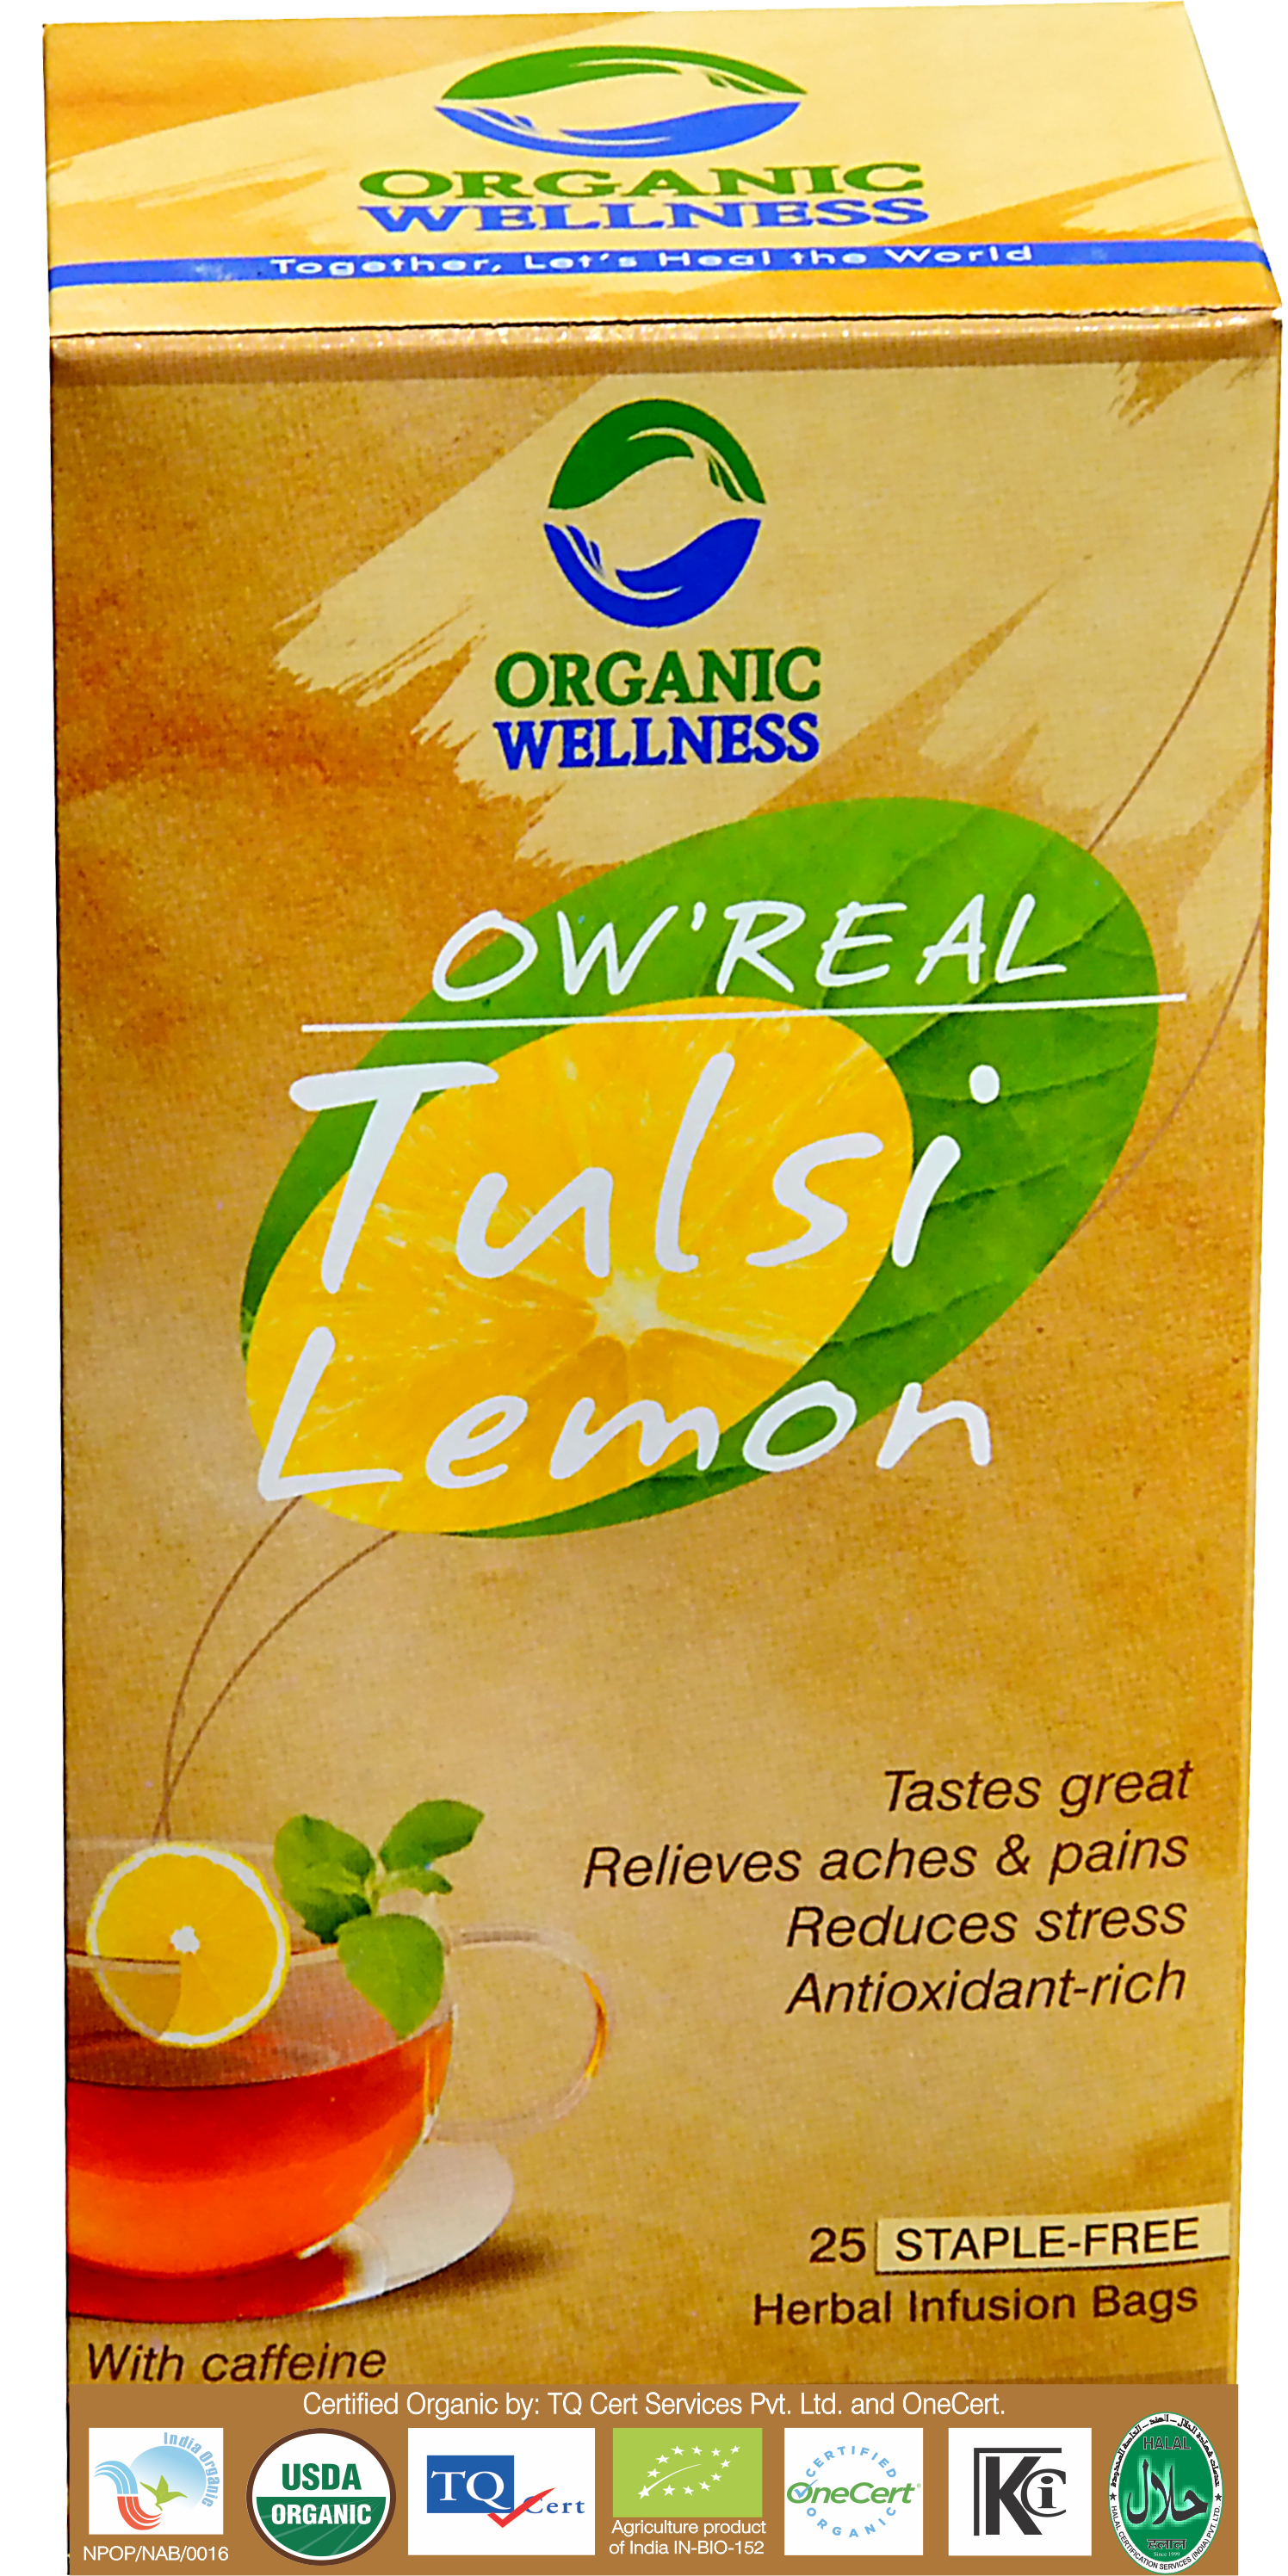 Buy Organic Wellness Real Tulsi Lemon Tea at Best Price Online